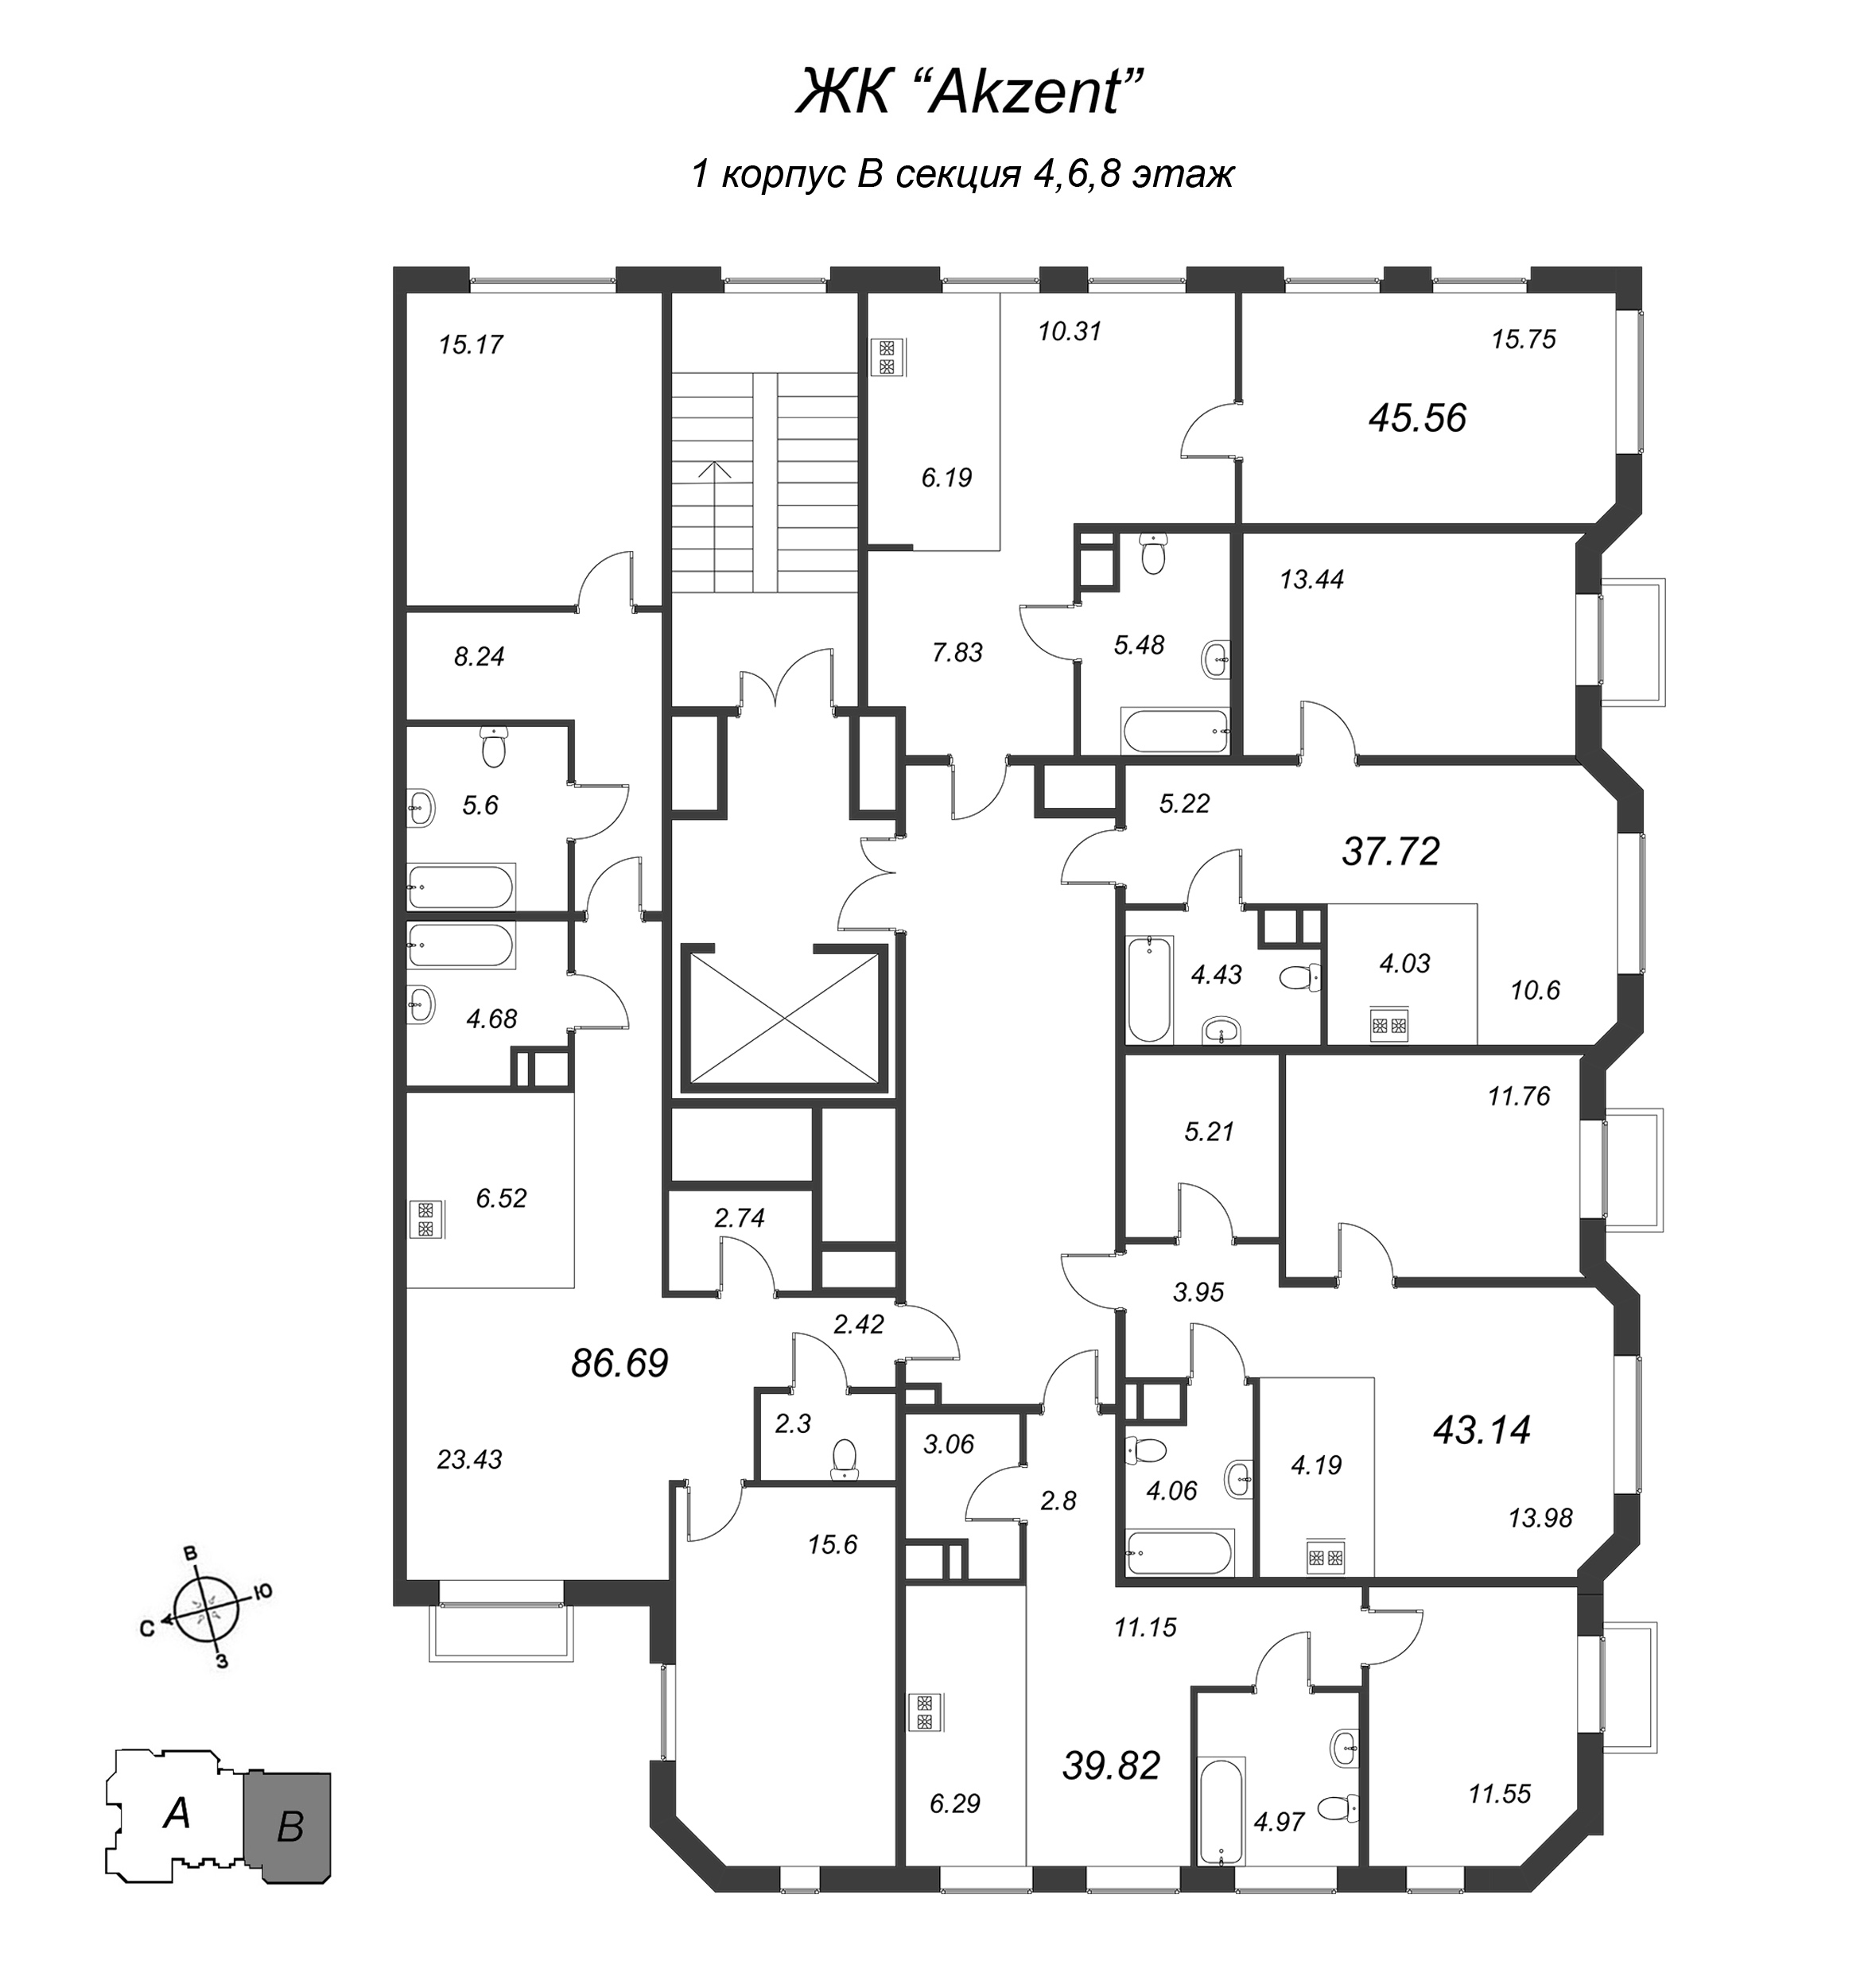 2-комнатная (Евро) квартира, 45.84 м² в ЖК "Akzent" - планировка этажа